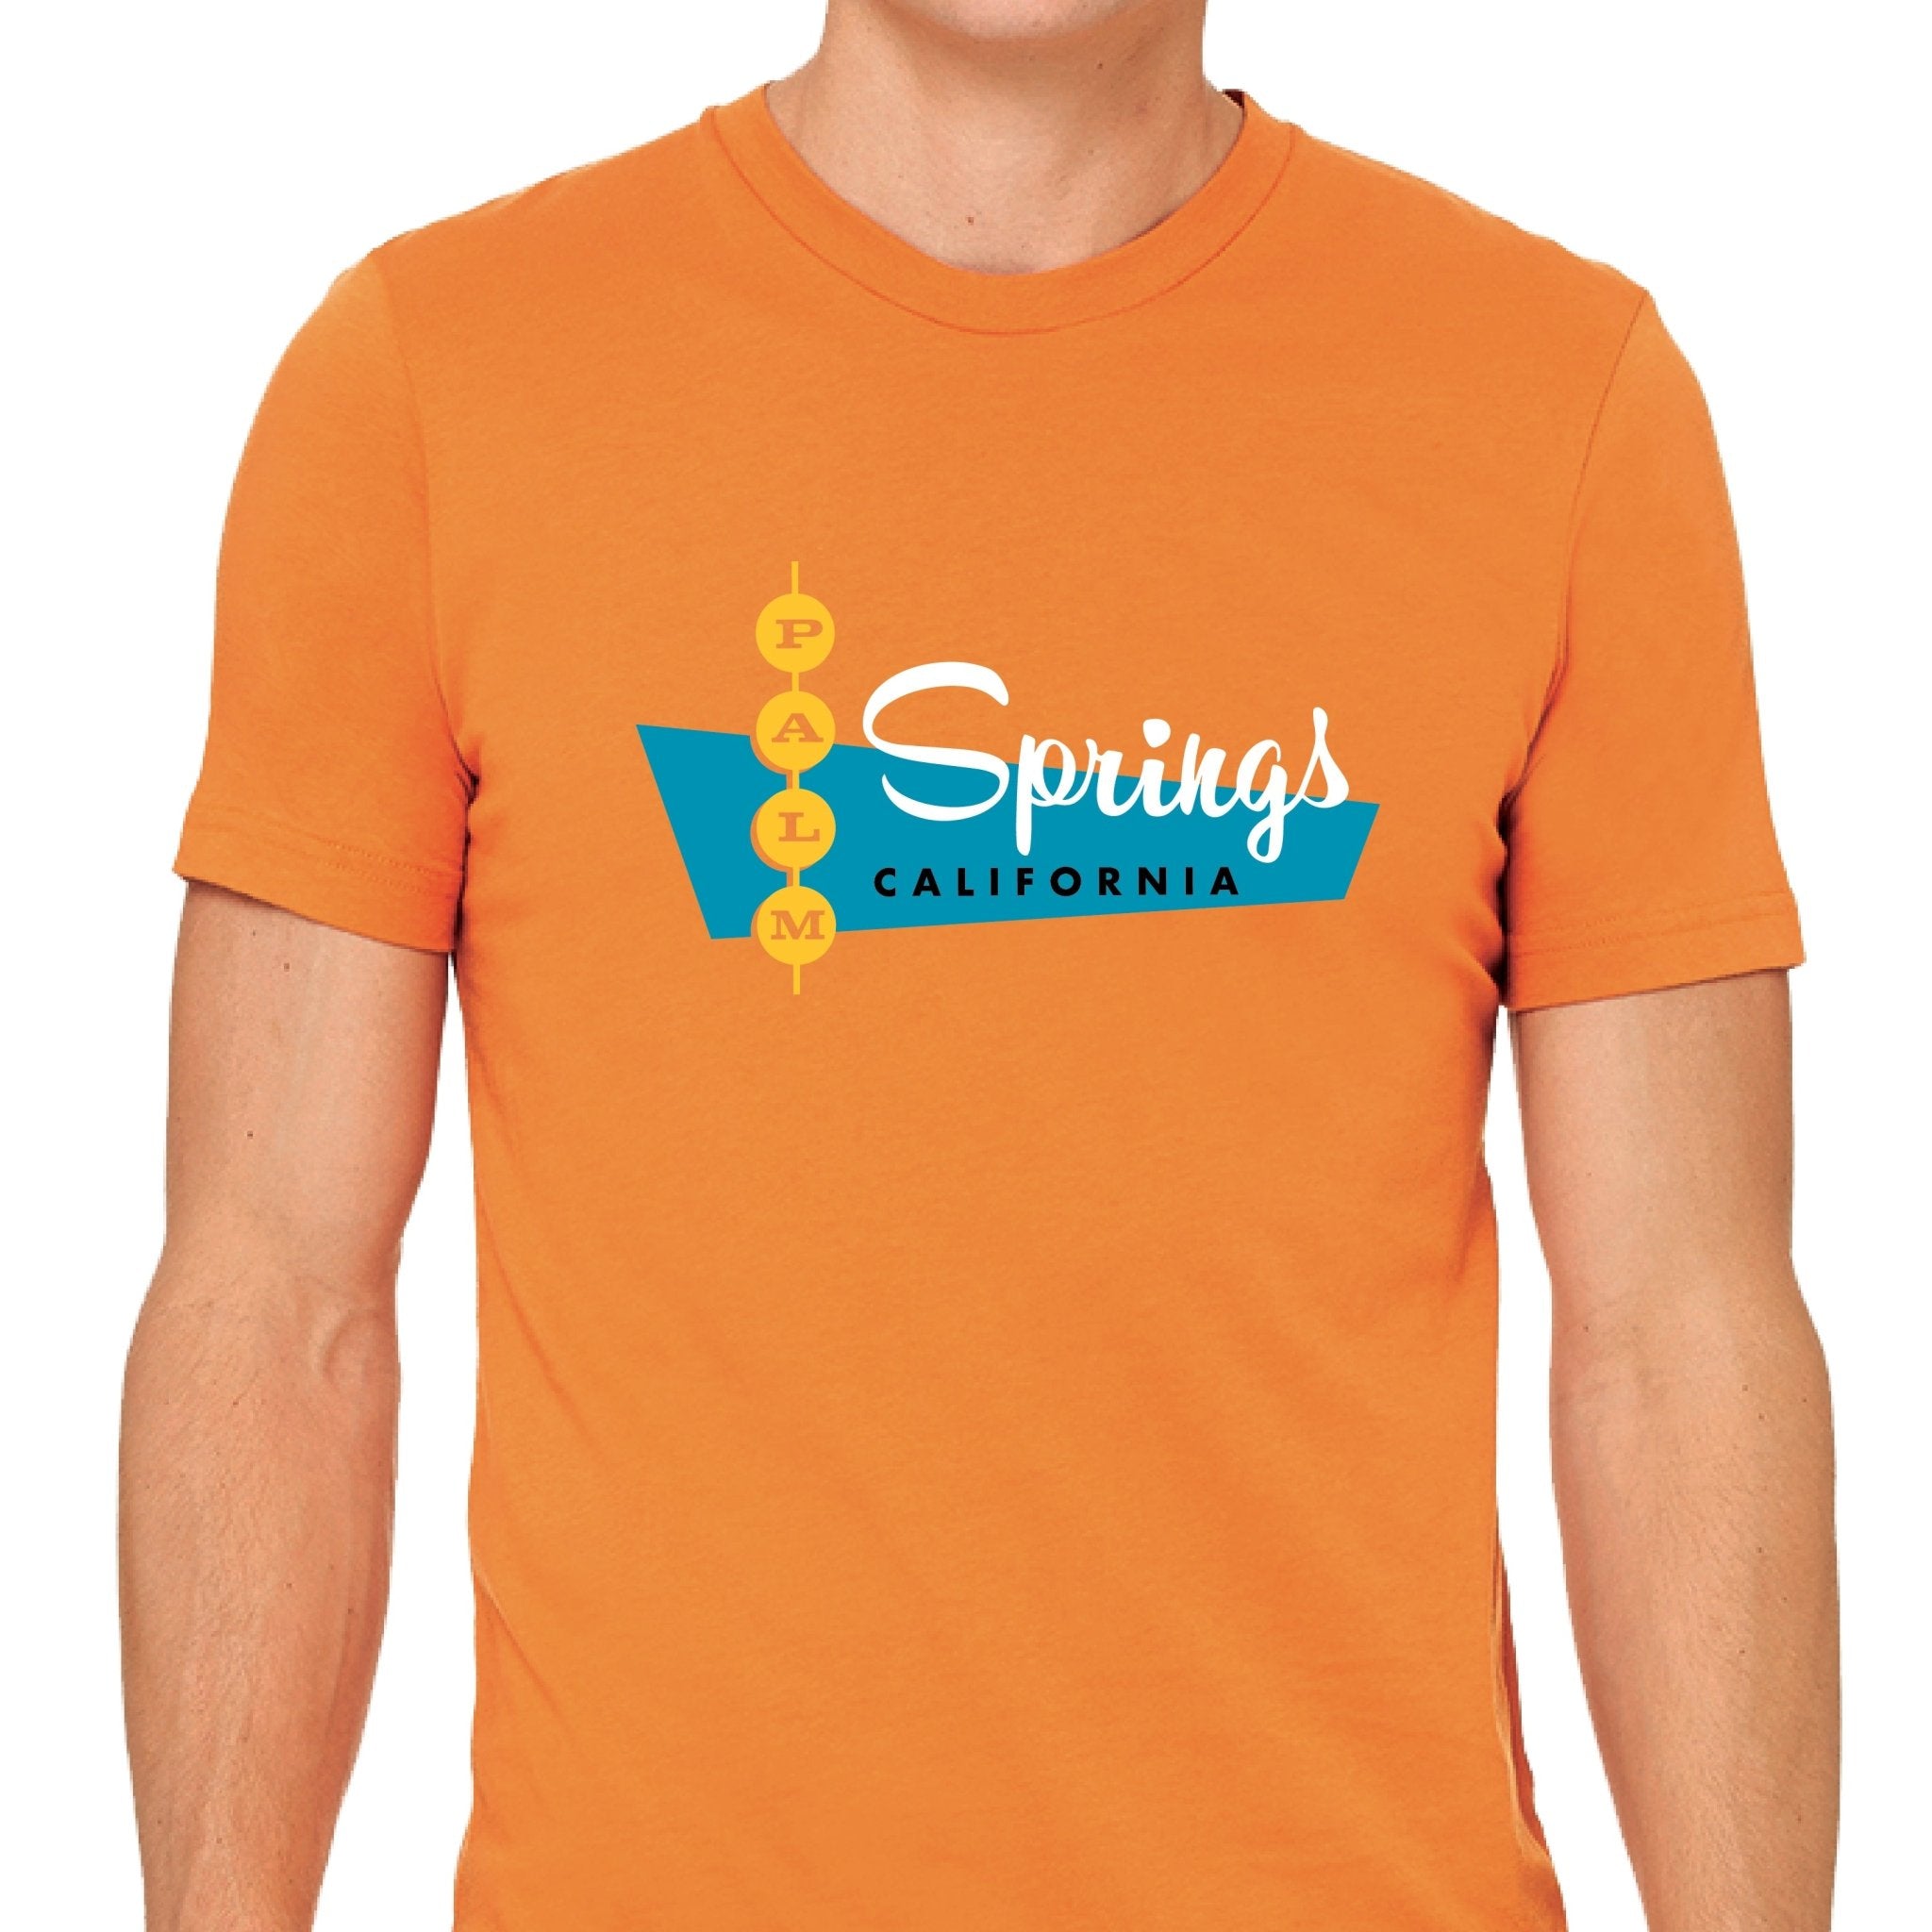 Palm Springs Retro Diner Design Unisex T-shirt - Orange - Destination PSP